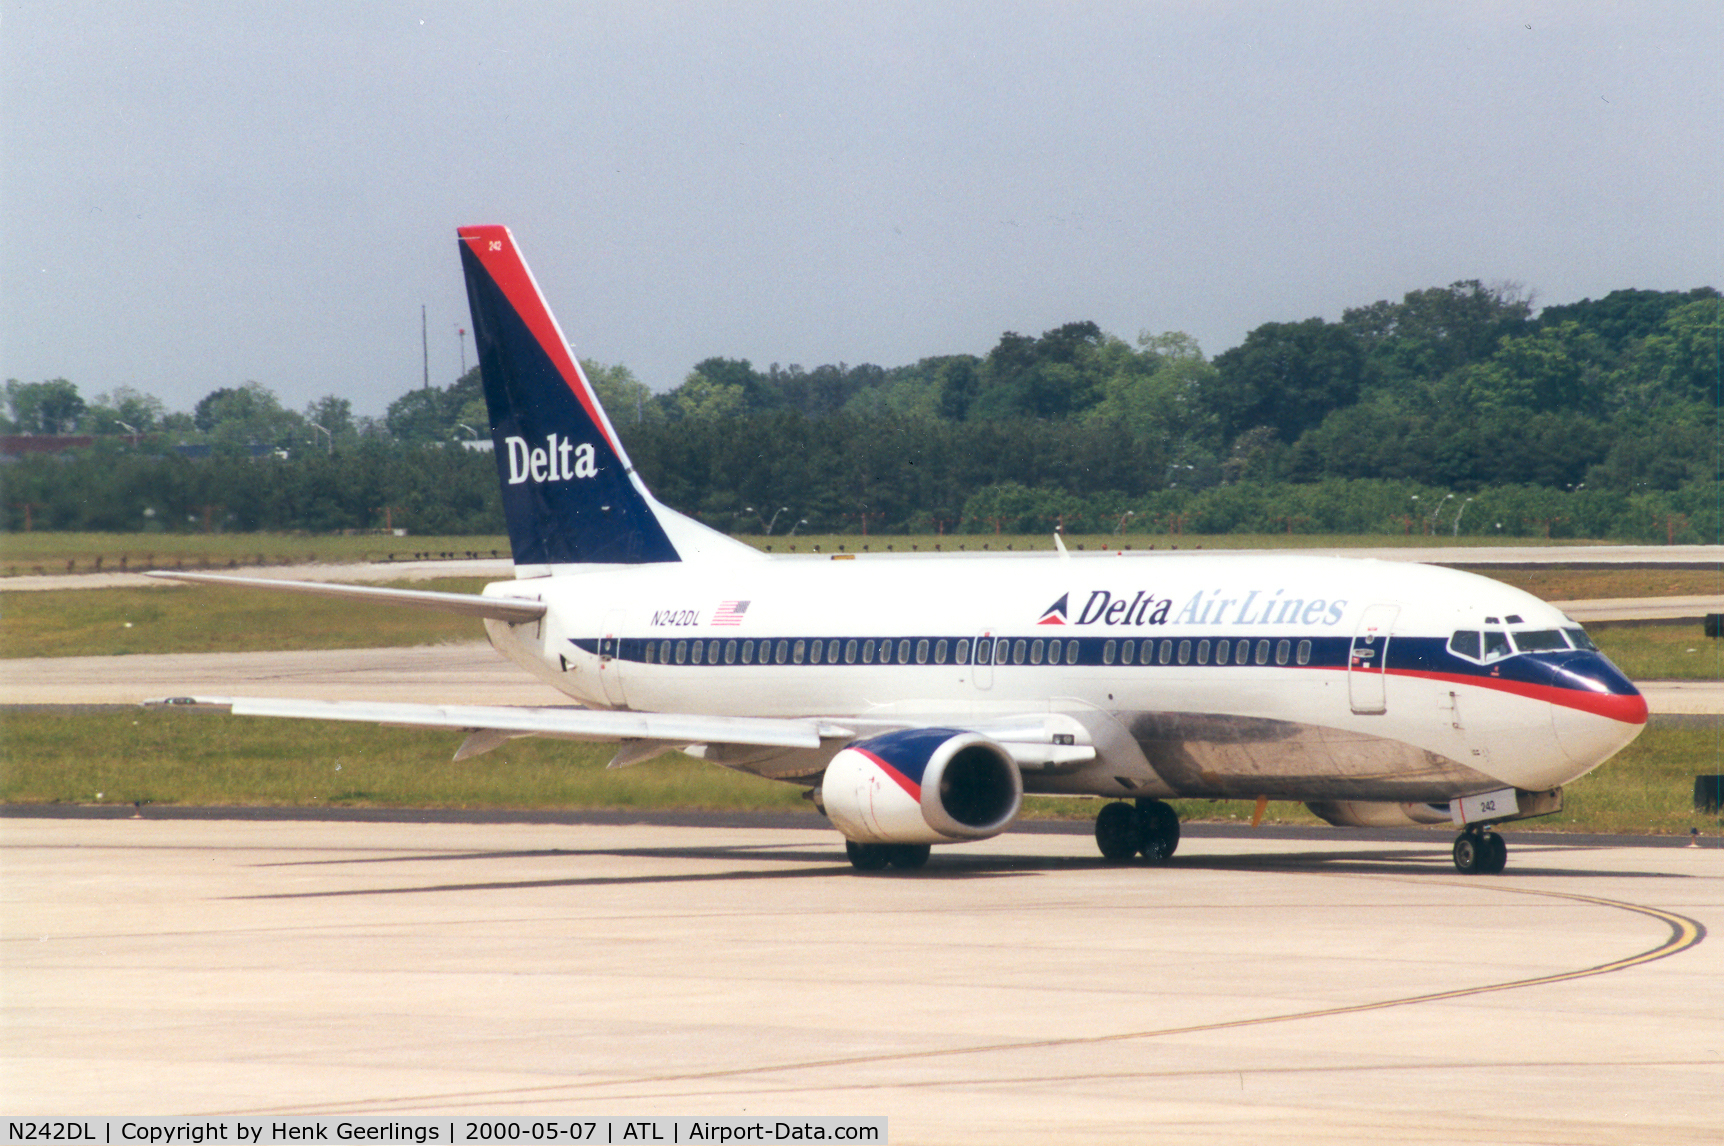 N242DL, 1987 Boeing 737-330 C/N 23834, Delta